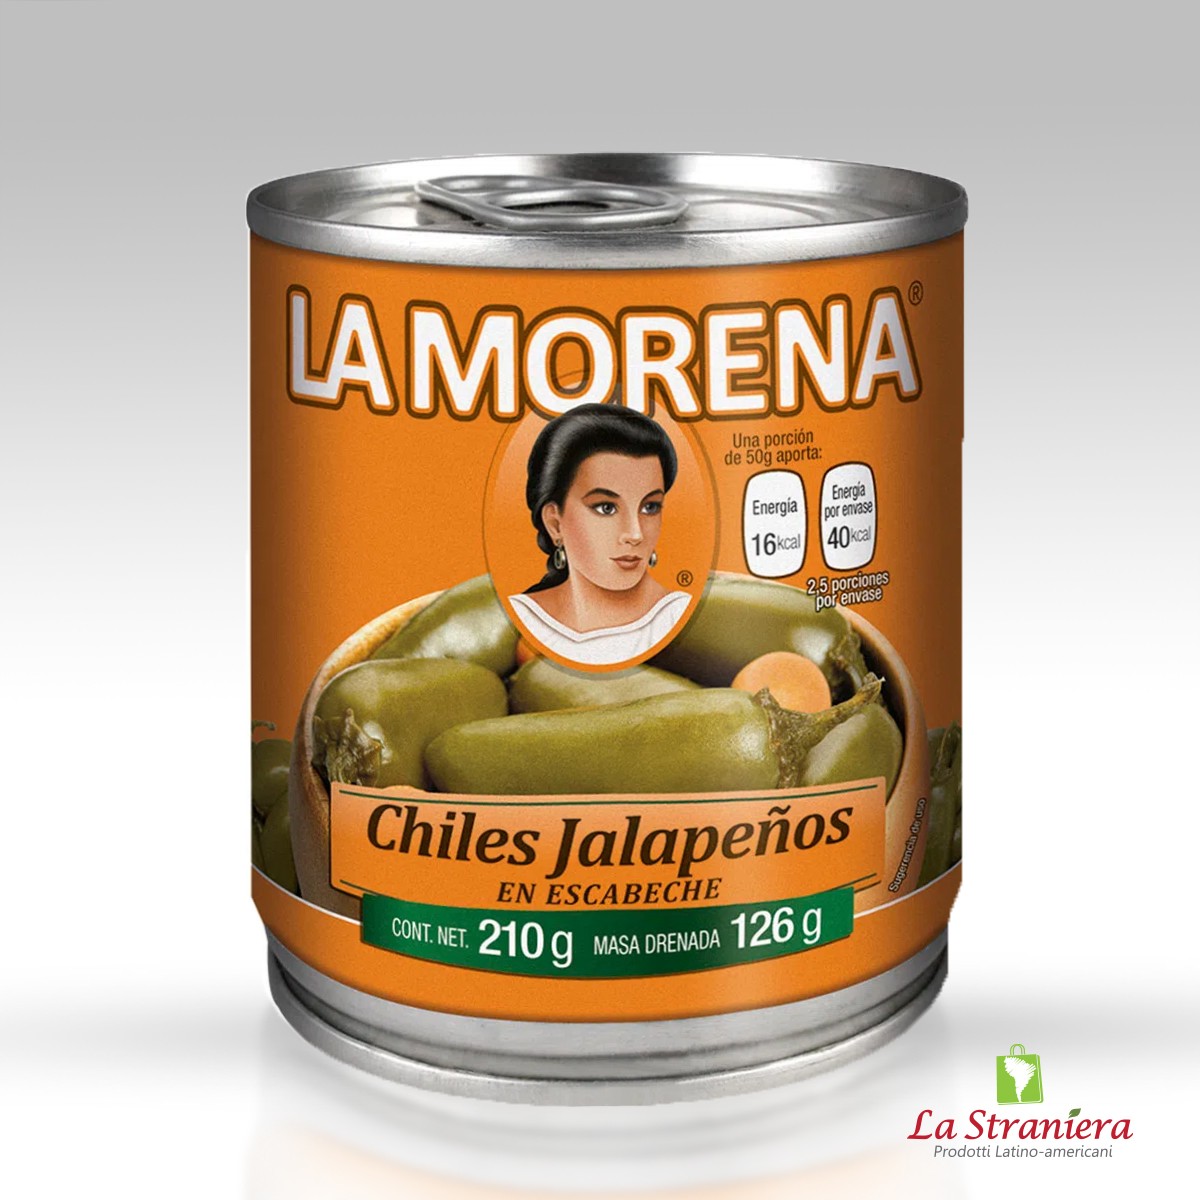 Peperoncini Jalapeño, Chiles Jalapeños La Morena 210G. - La Straniera  Torino - Specialità Sudamericane